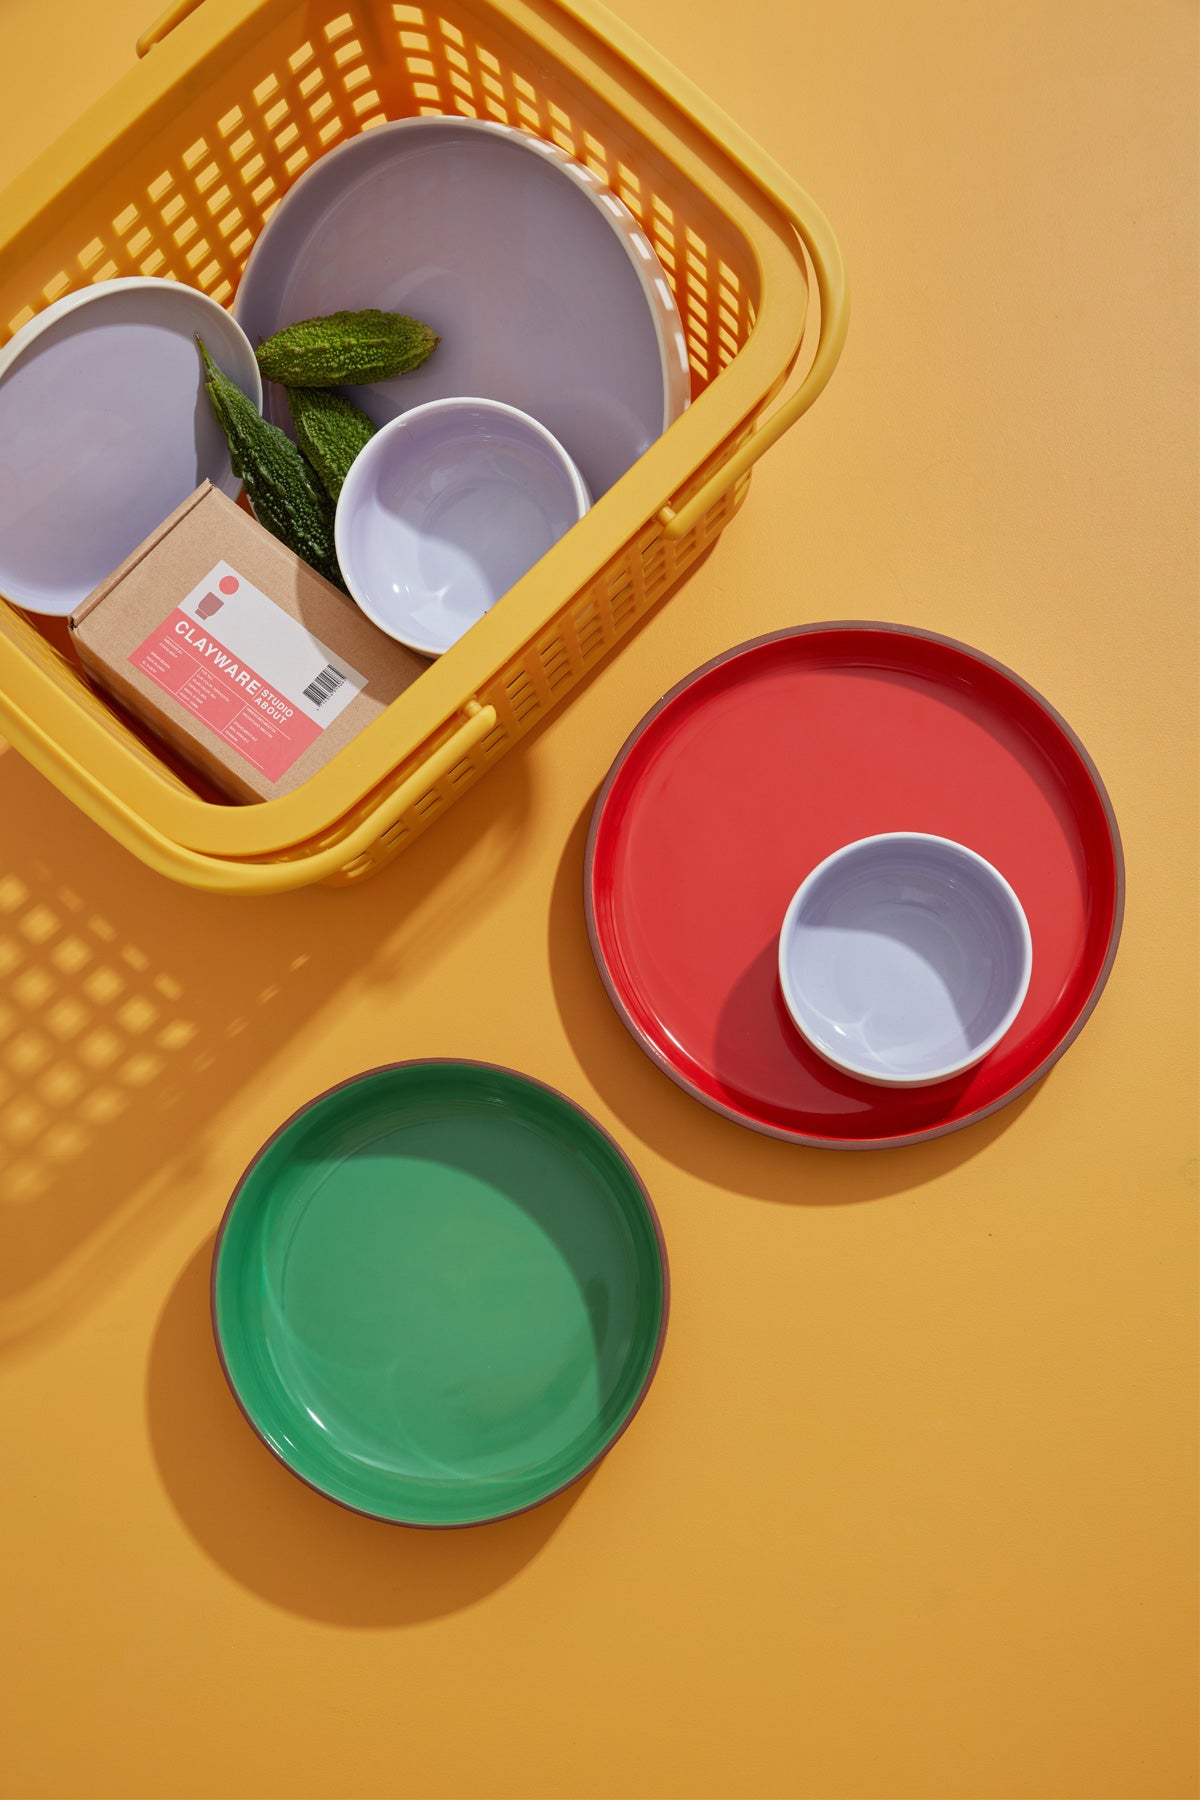 Clayware serving bowl - Terracotta/ green